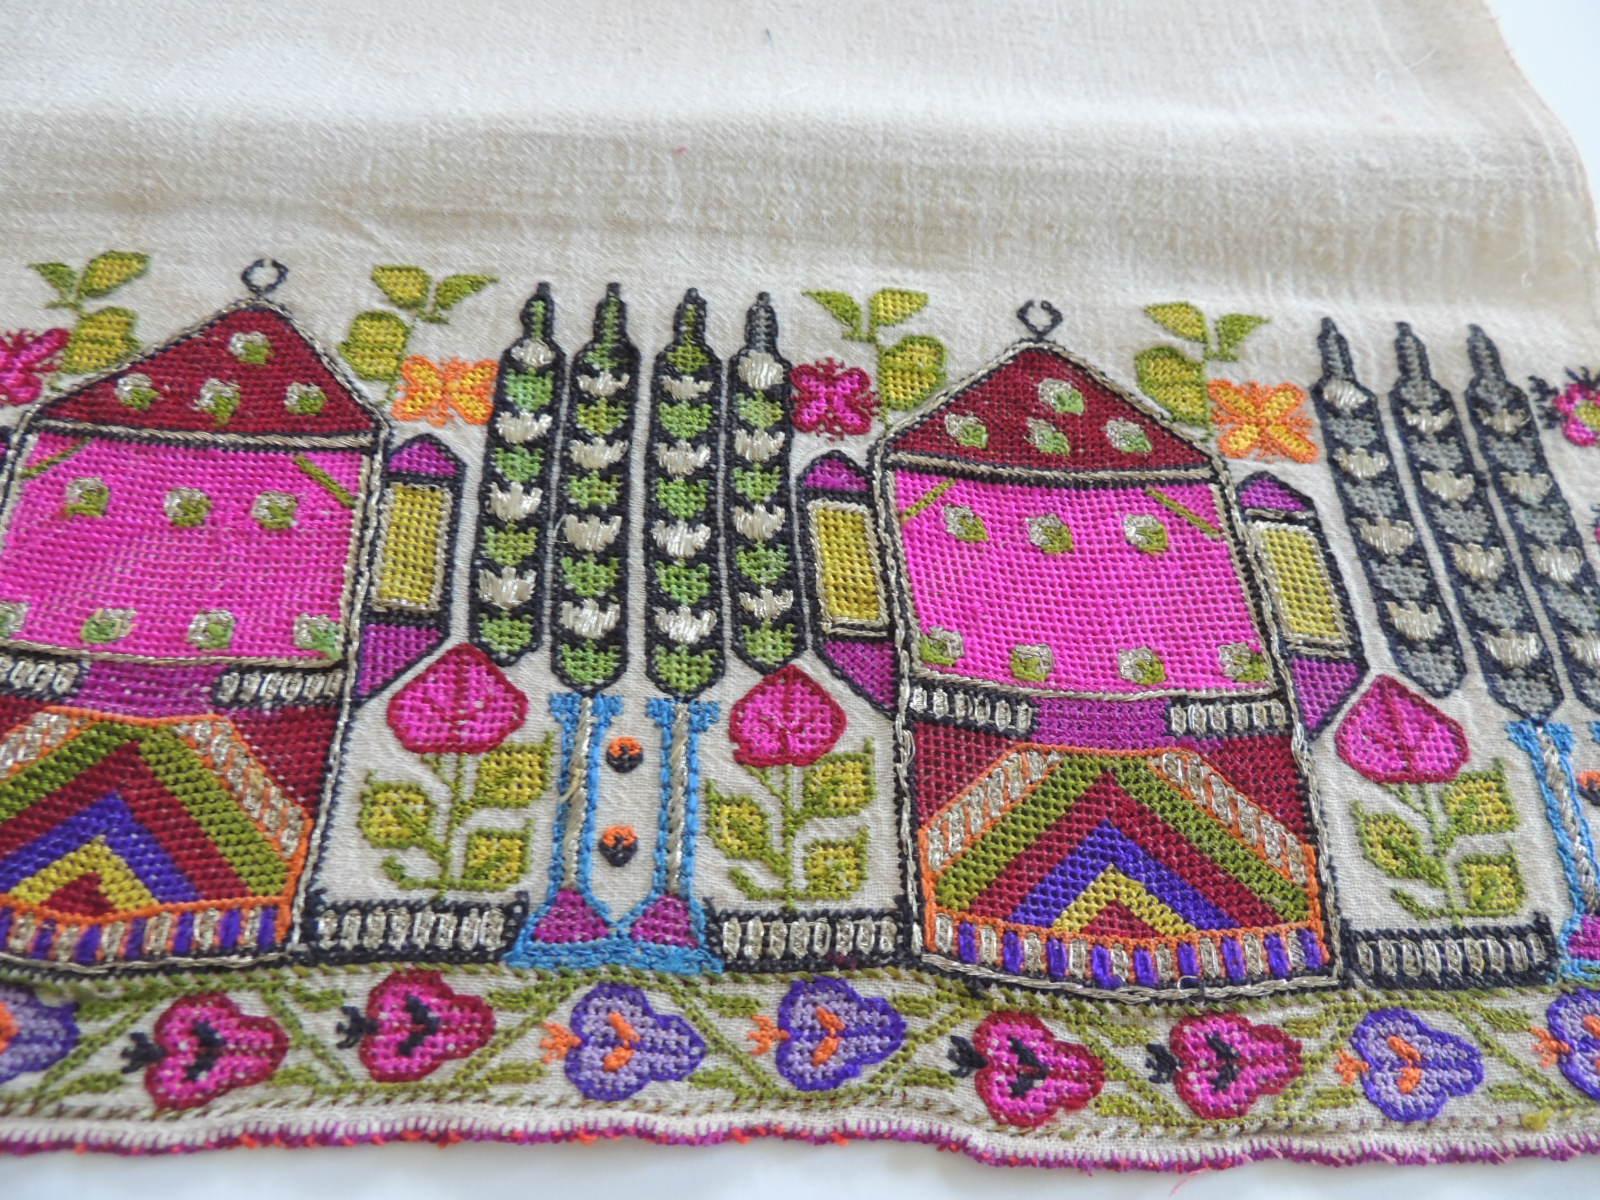 Moorish Antique Turkish Embroidered Colorful Textile